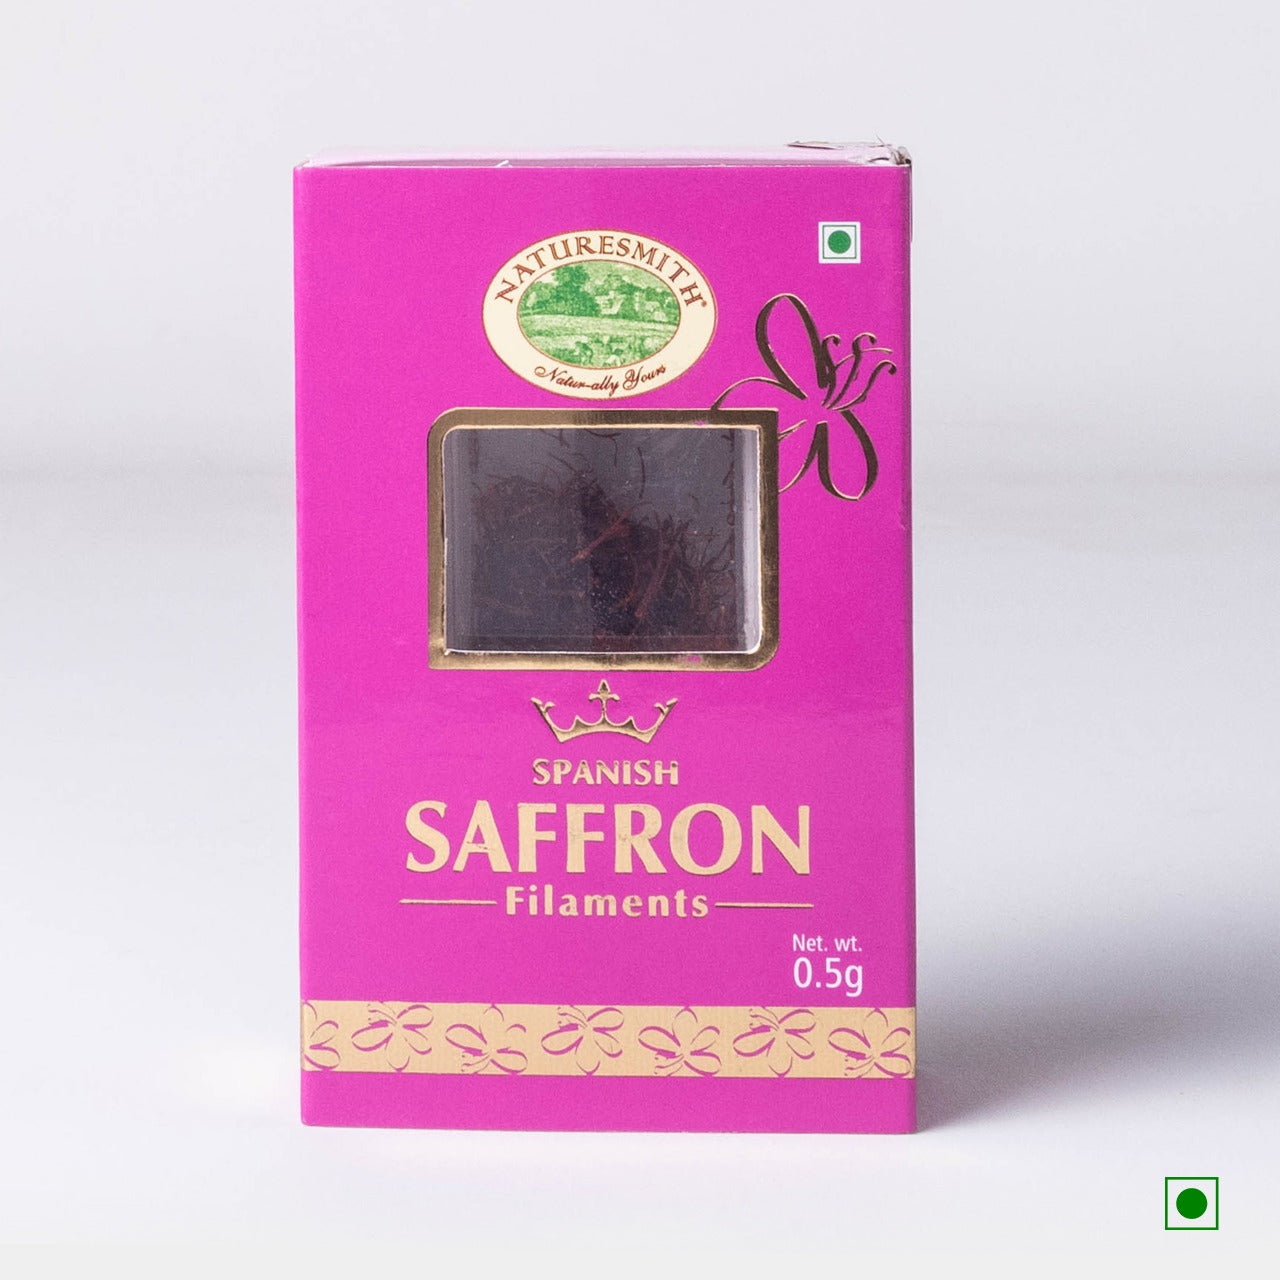 Spanish Saffron Filaments 0.5g